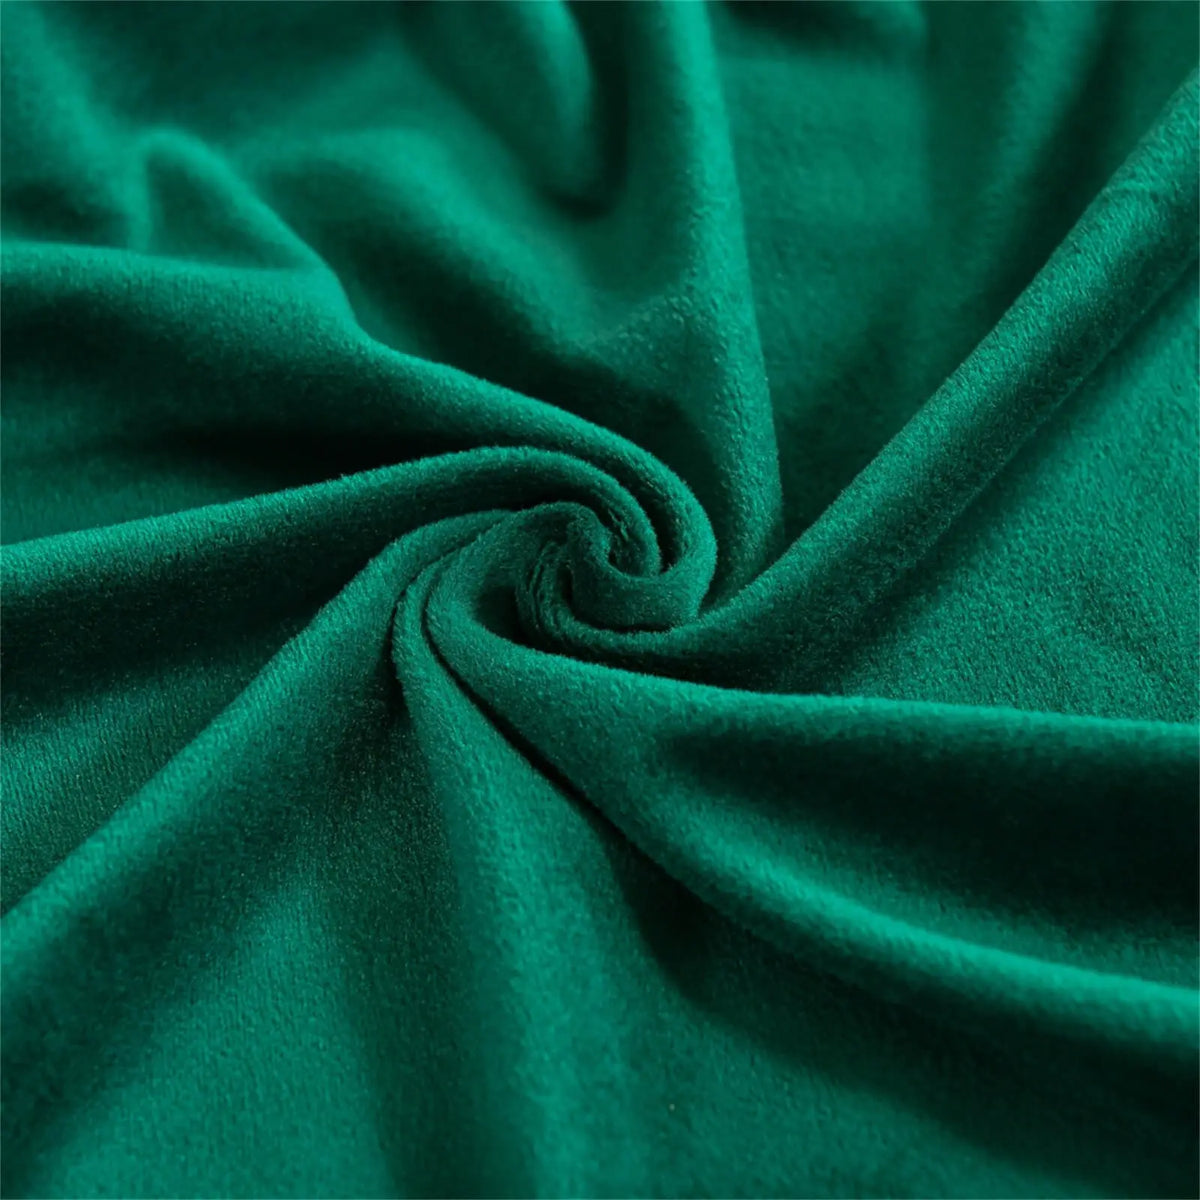 Green Velvet Wingback Chair Slipcover - 2 Pieces Crfatop %sku%